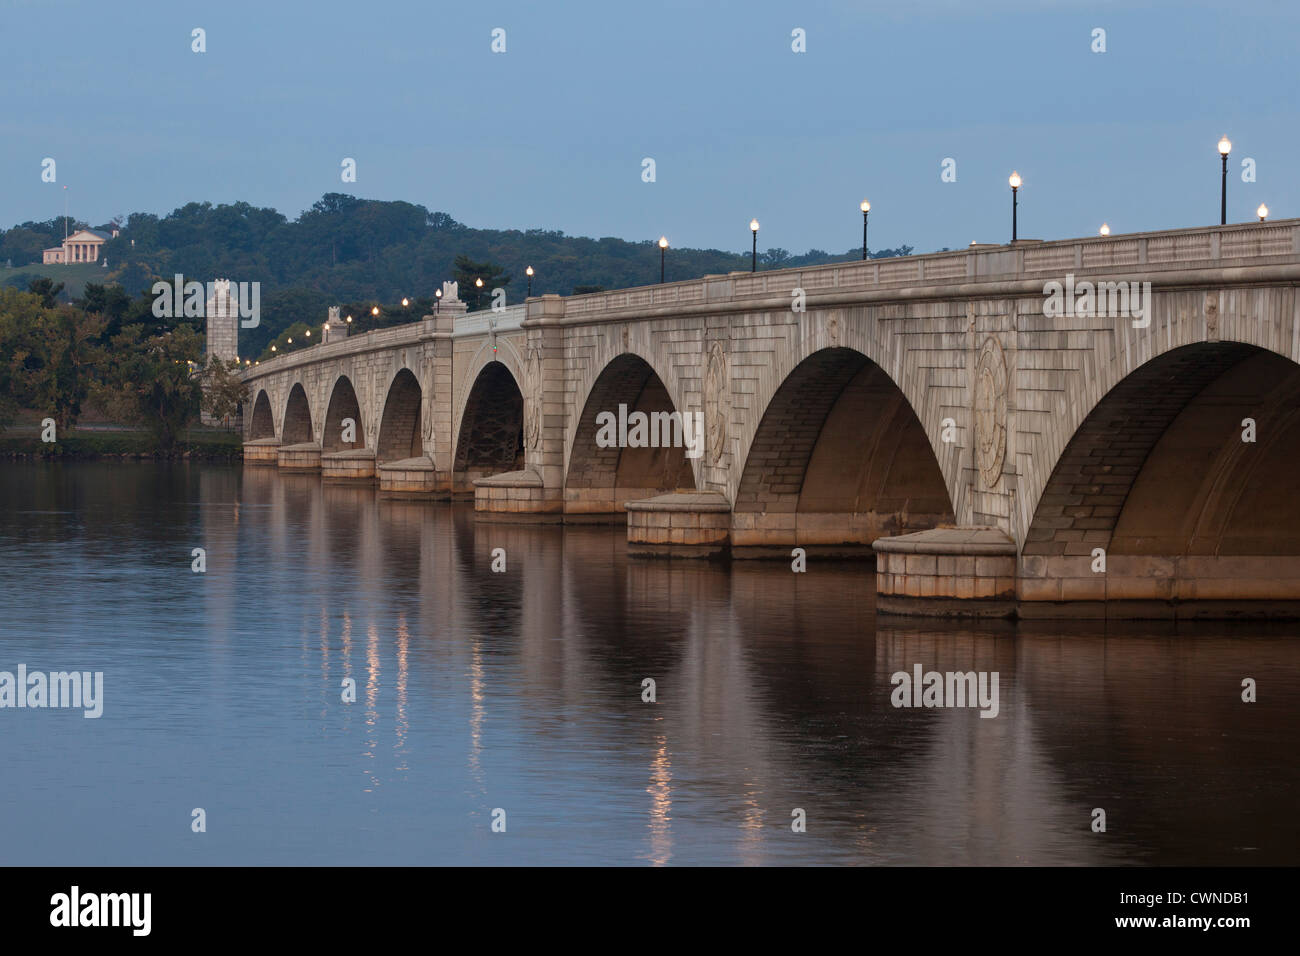 Arlington Memorial Bridge - Washington, DC USA Banque D'Images